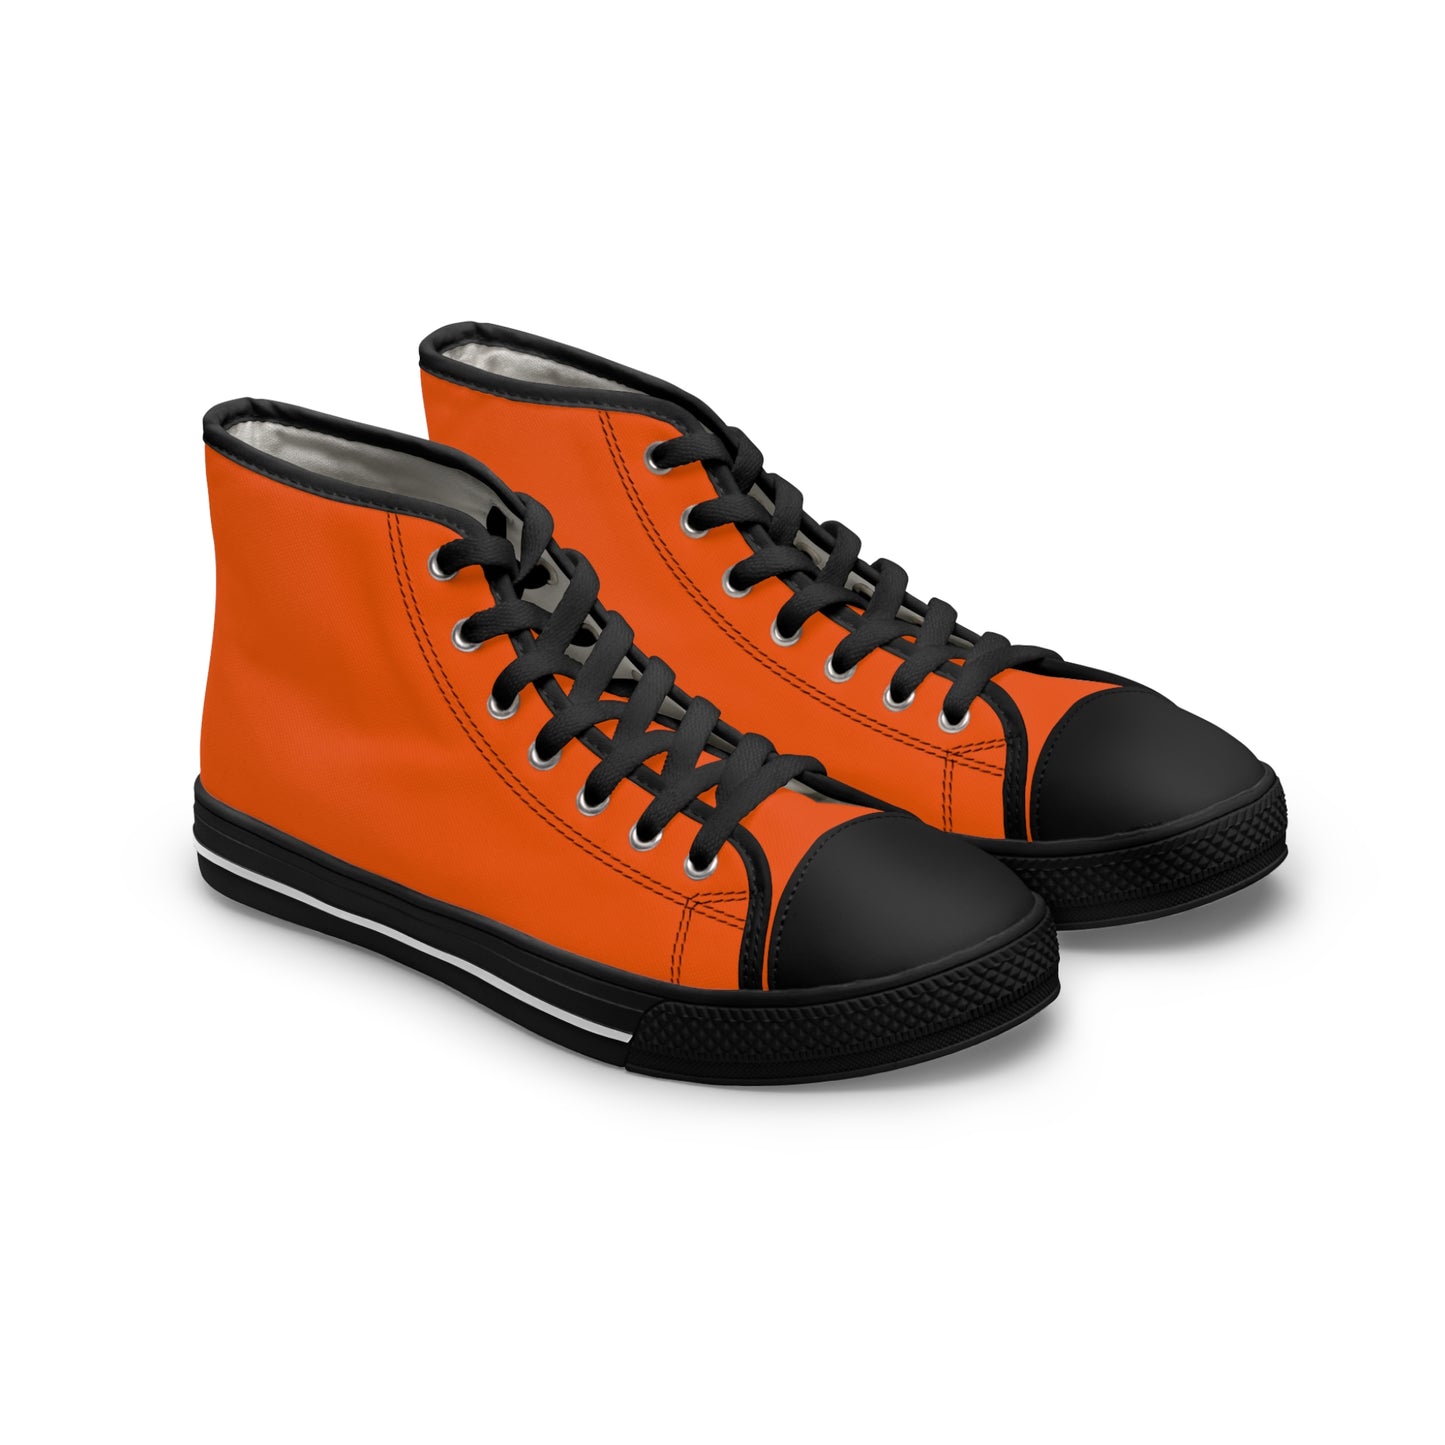 Women's High Top Sneakers - Dark Orange US 12 White sole